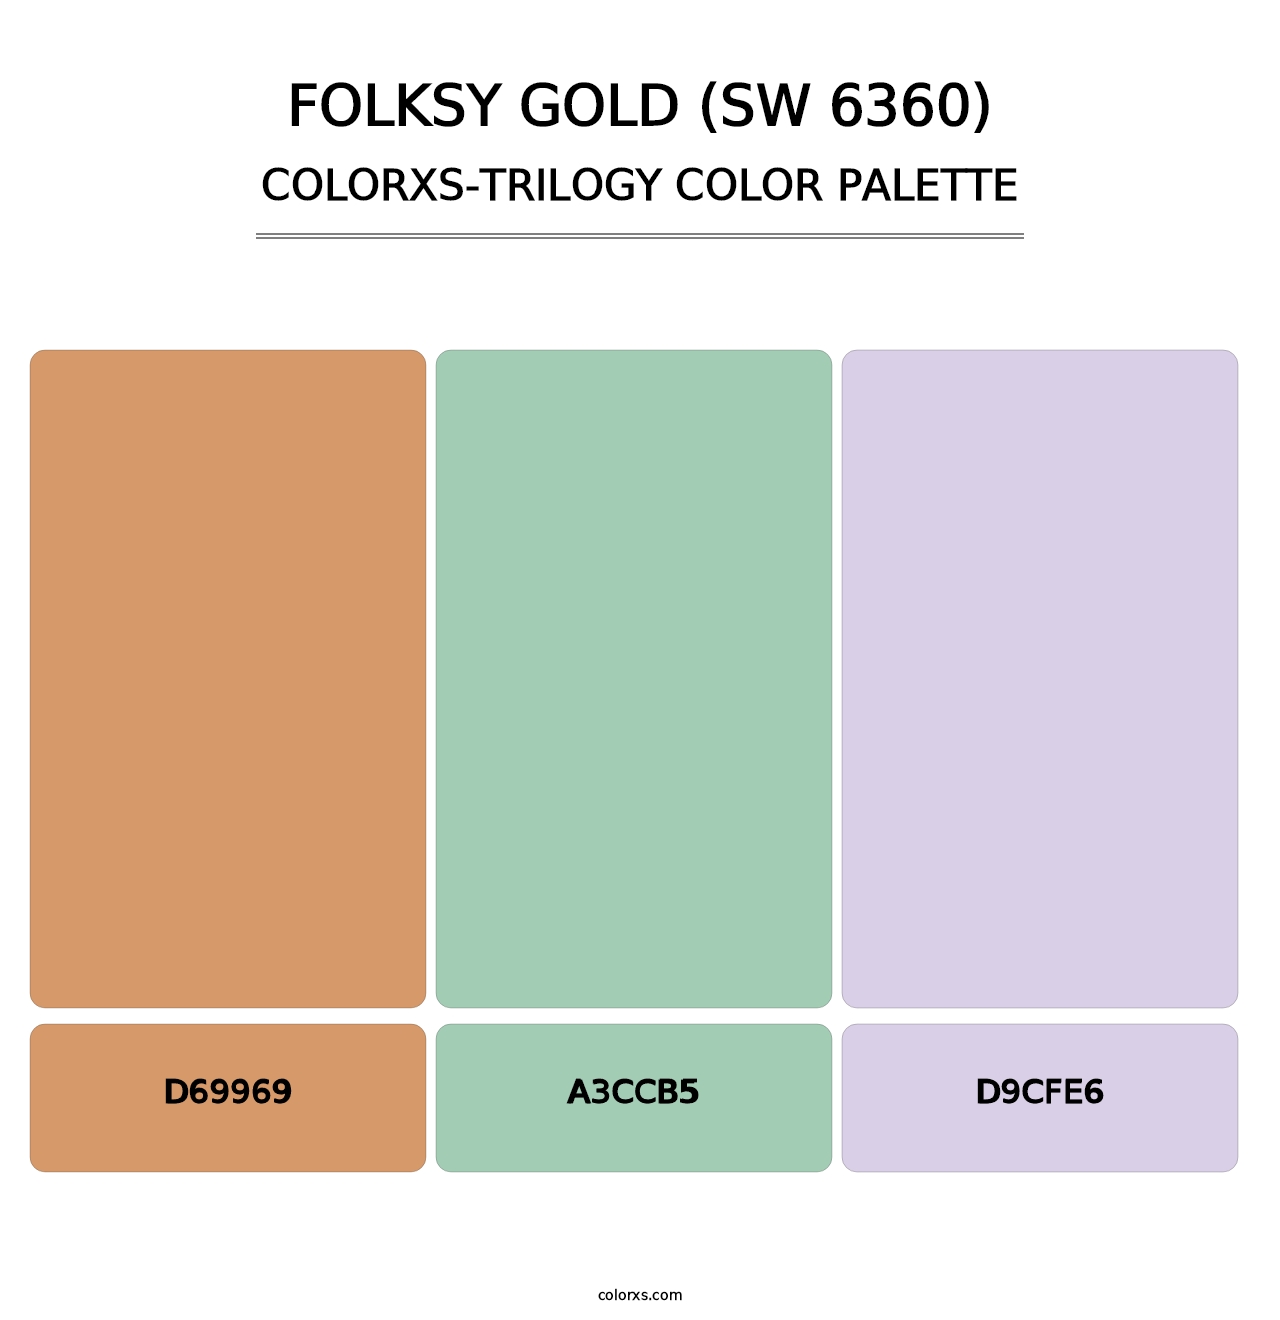 Folksy Gold (SW 6360) - Colorxs Trilogy Palette